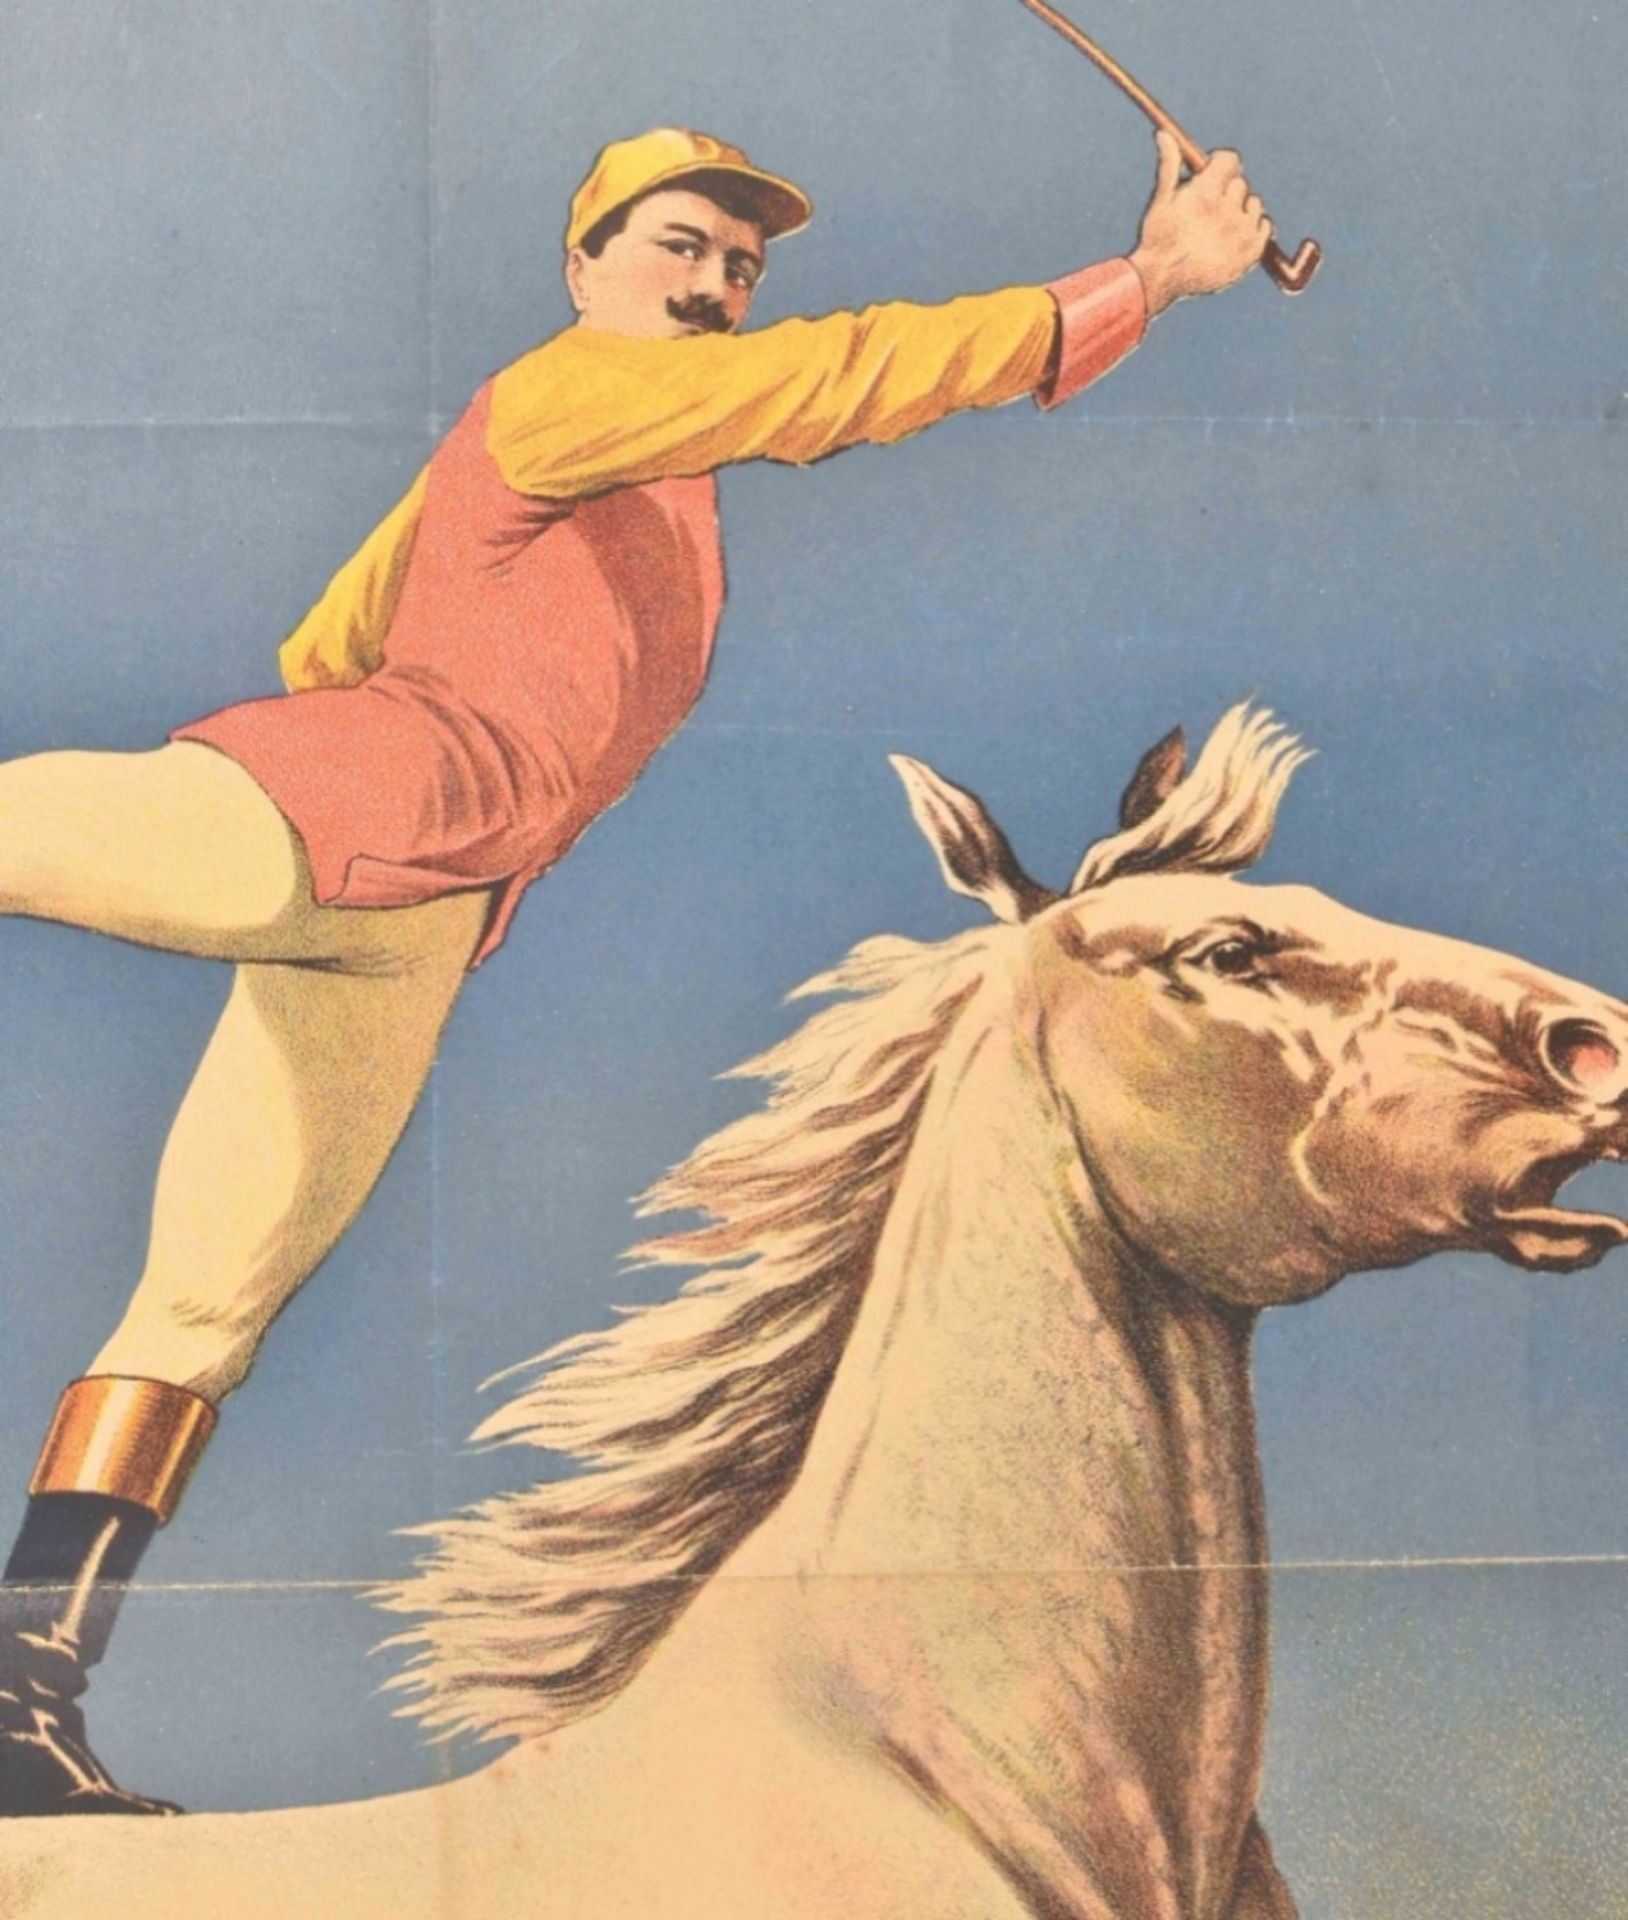 [Acrobatics] [Balance act. Horse] "Acrobat on horseback"  Friedländer, Hamburg, 1908 - Bild 4 aus 4